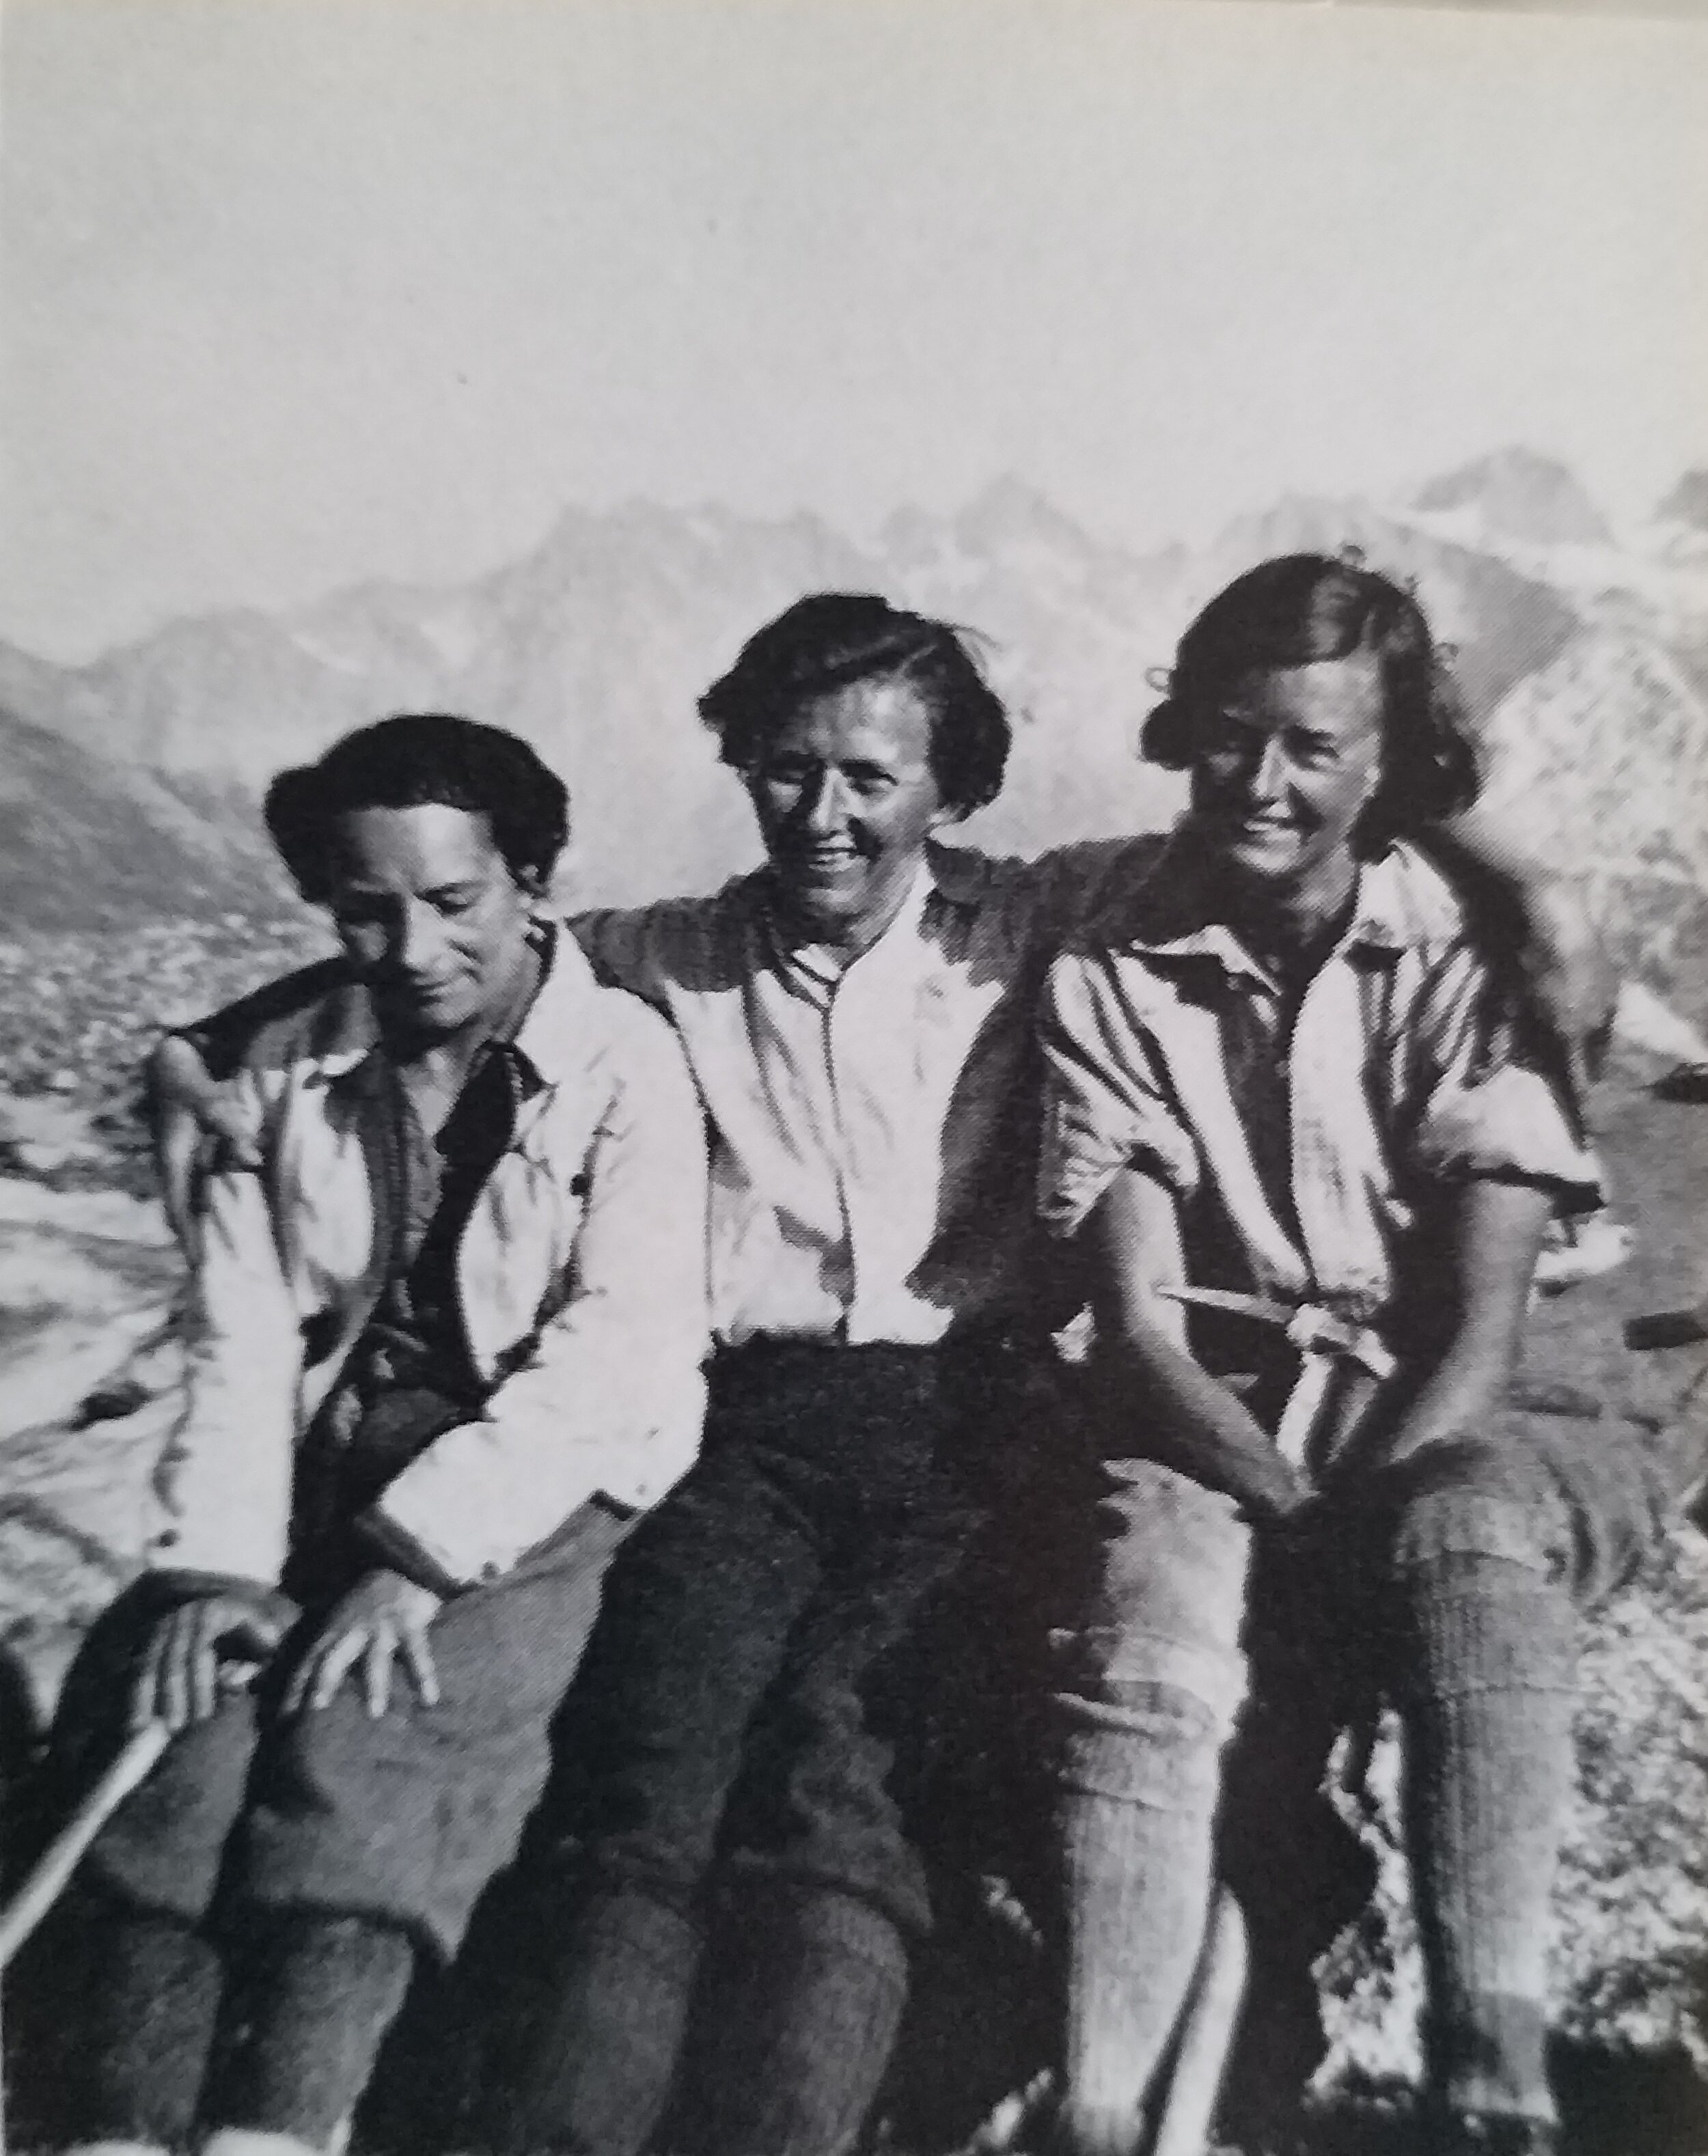 Cordée féminine: Alice Damesme, Micheline Morin and Nea Morin c1933